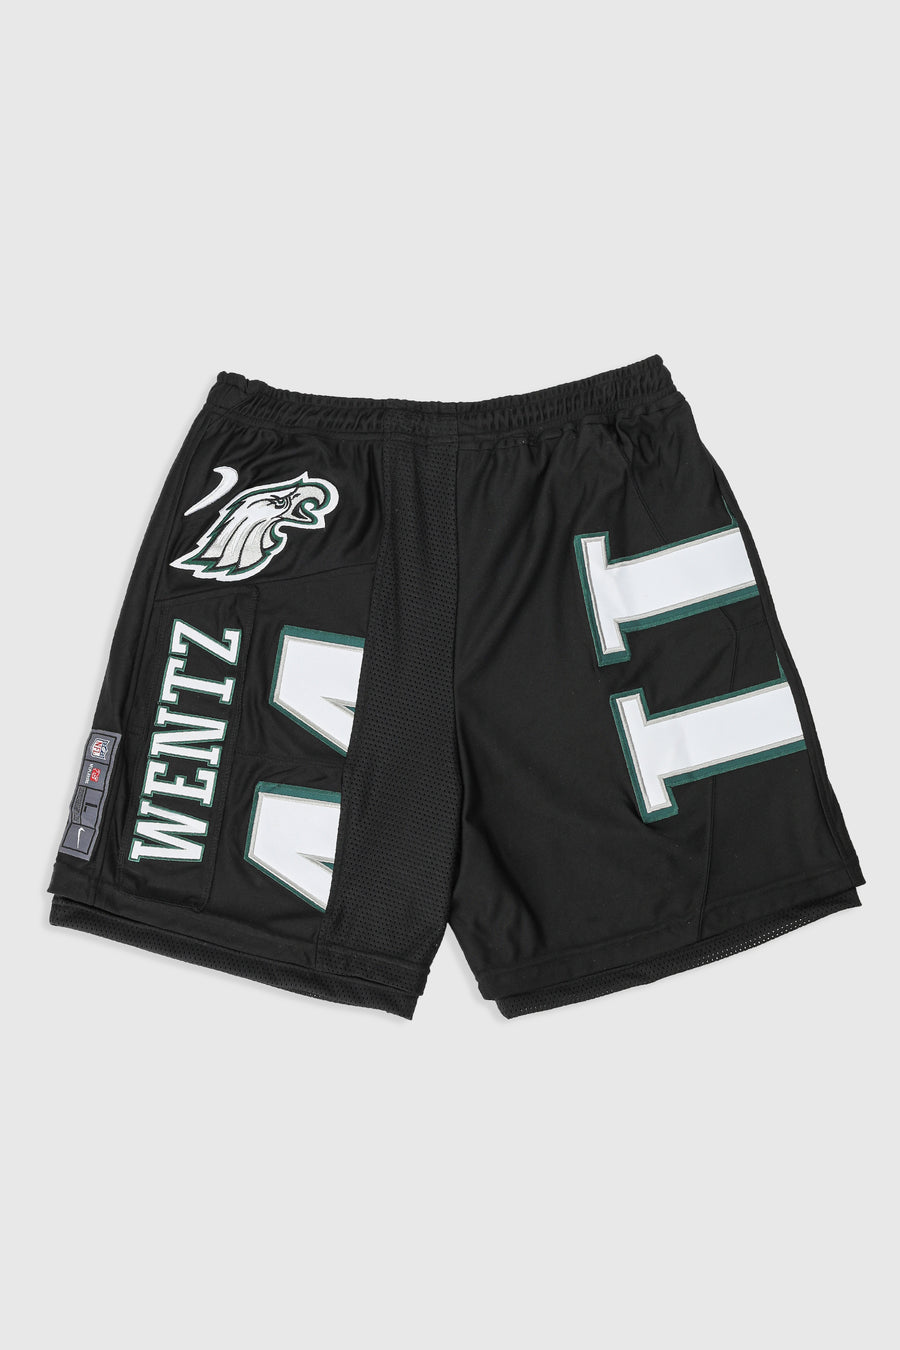 Unisex Rework Eagles NFL Jersey Shorts - Women-XL, Men-L